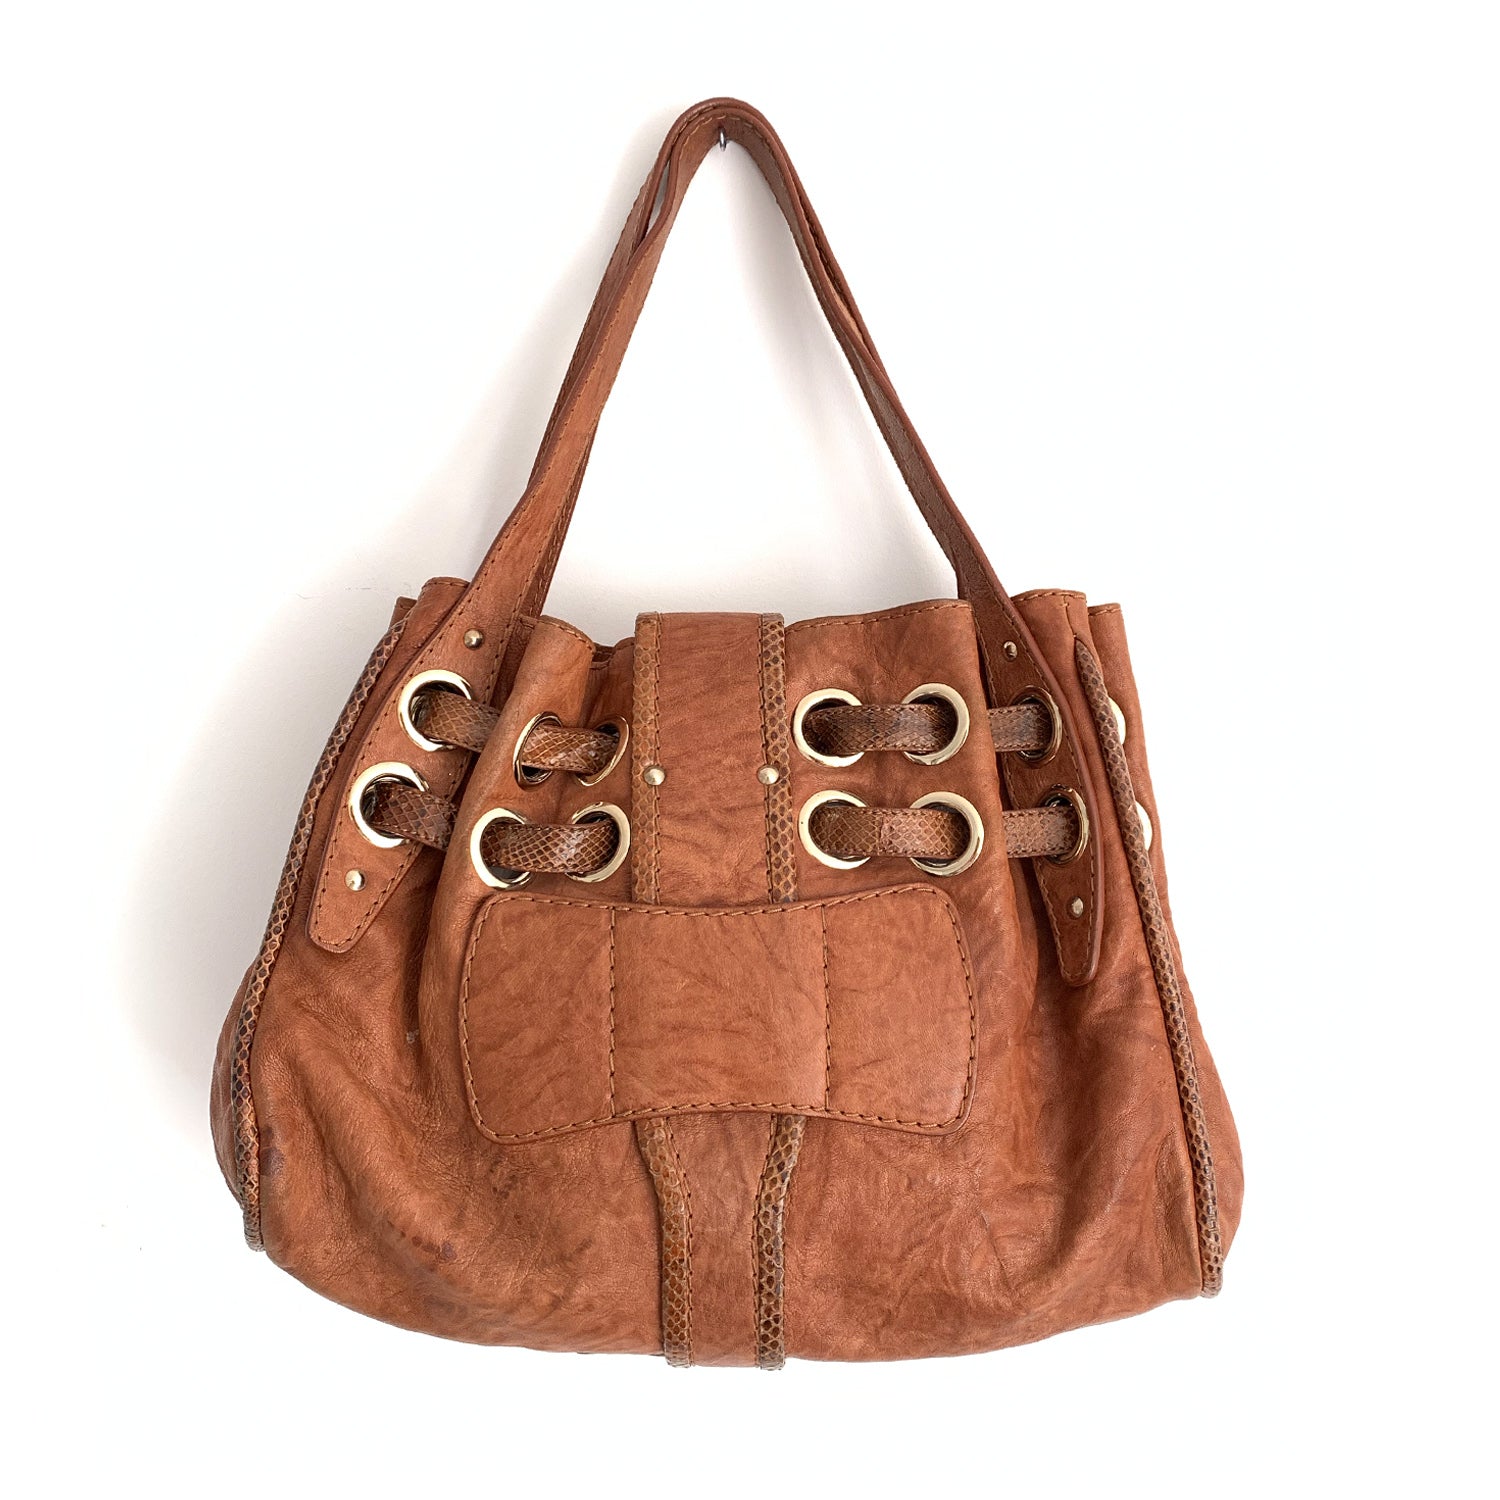 PU Leather Plain Jimmy Choo 5pc Combo Ladies Bag at Rs 450/bag in Mumbai |  ID: 22123222630